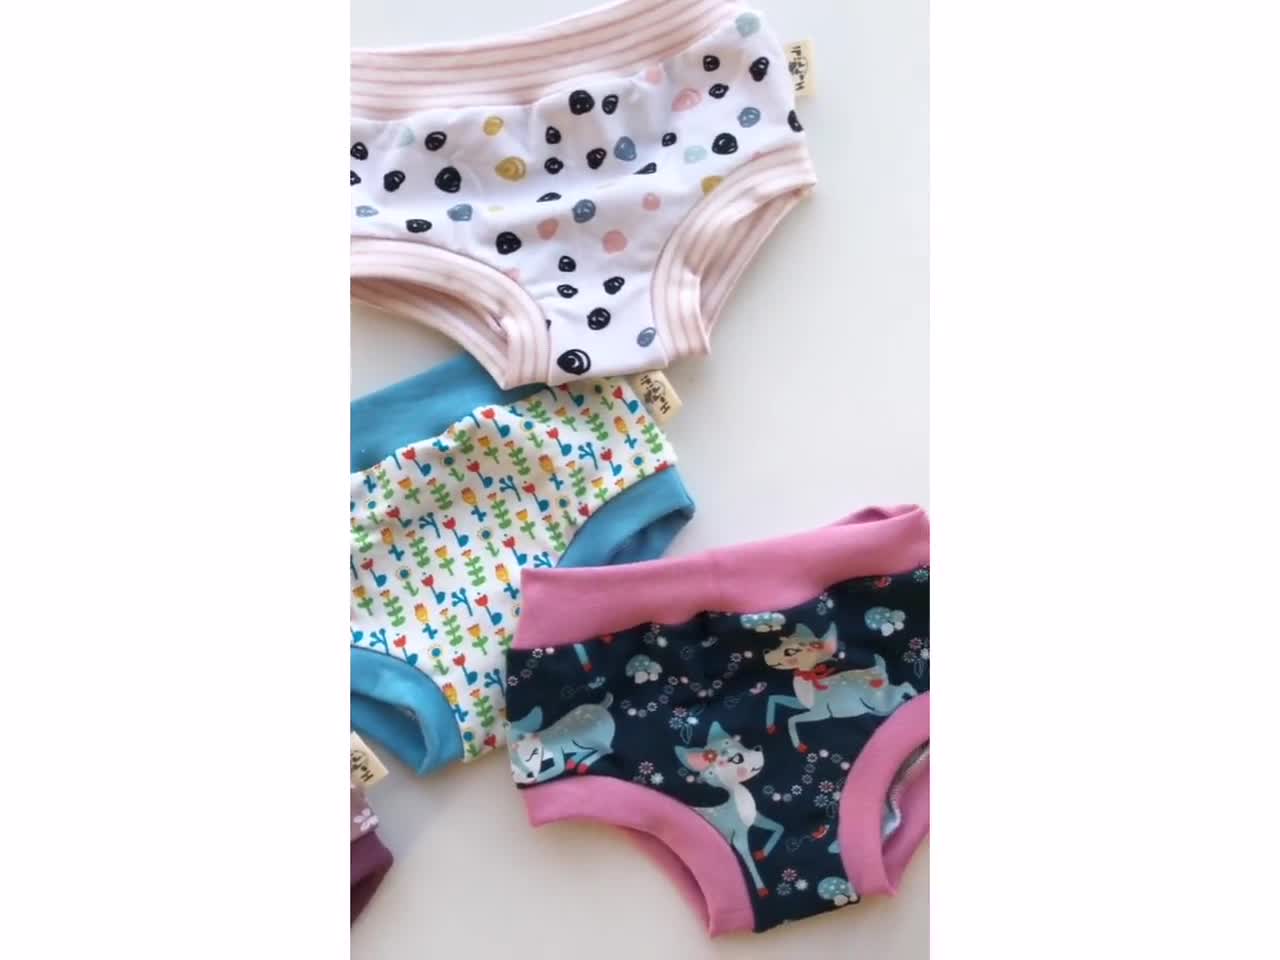 Kleding Unisex kinderkleding Onderkleding Eliminatie Communicatie baby ondergoed 